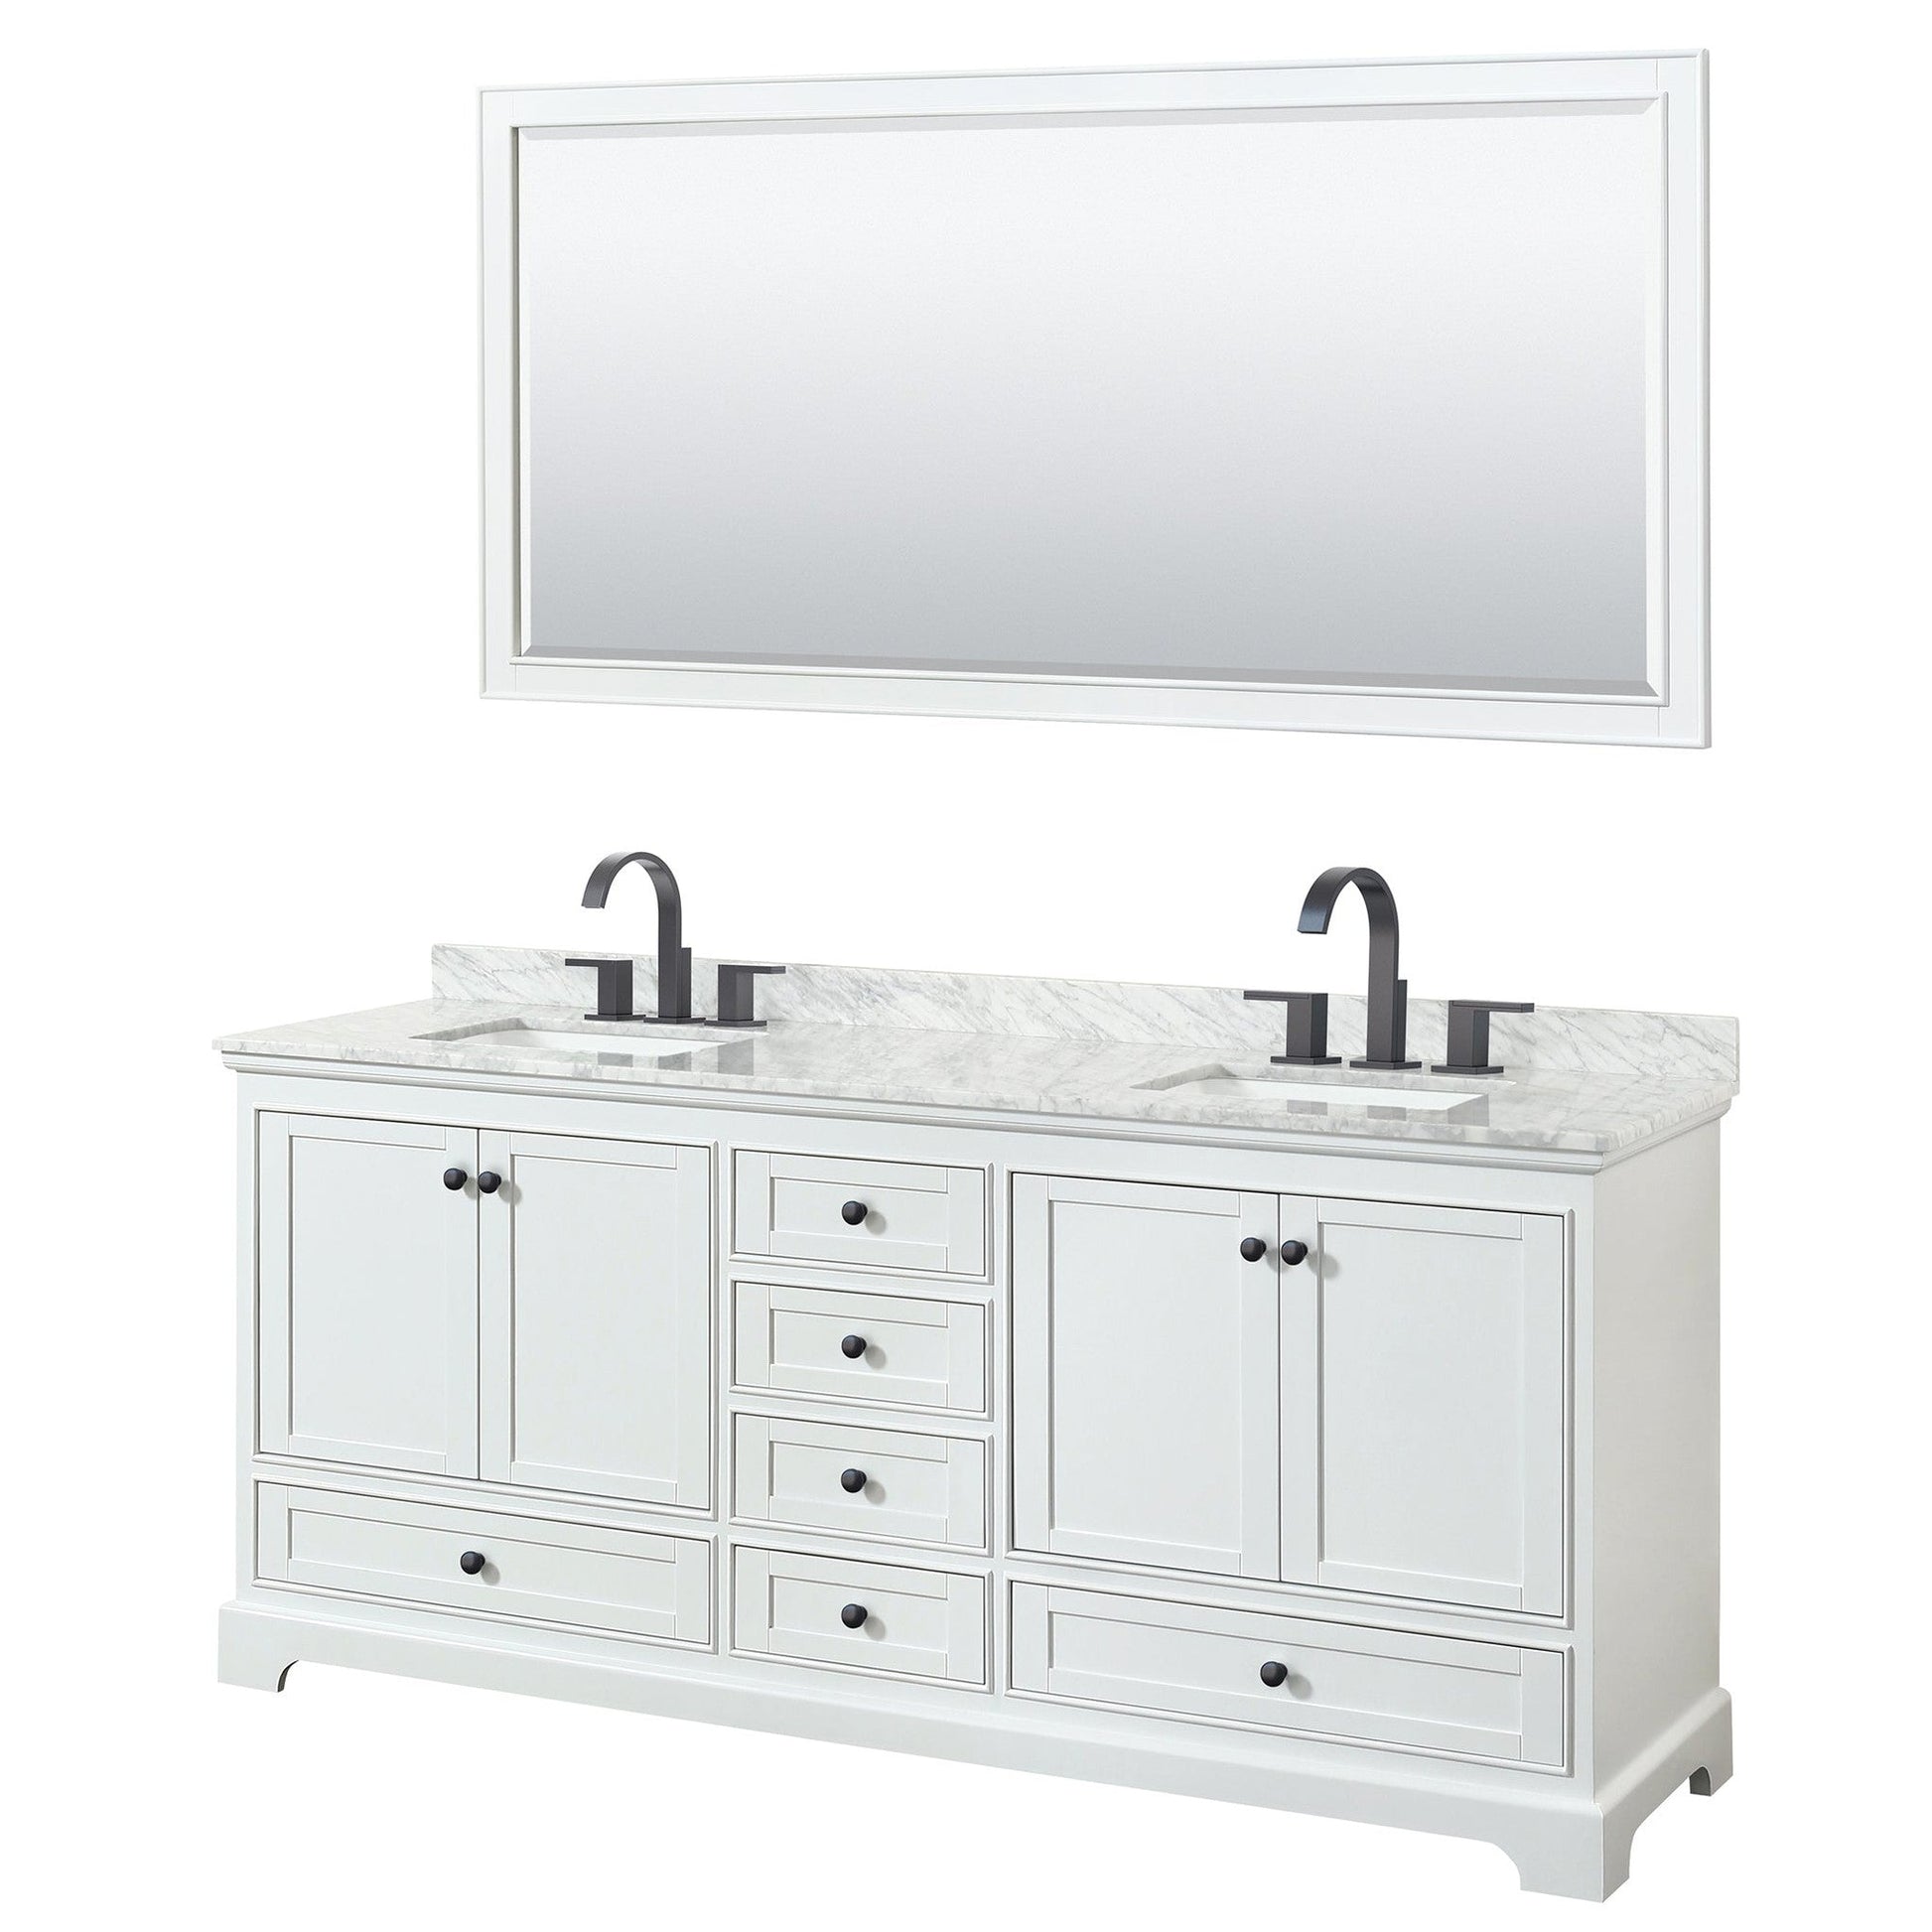 Deborah 80" Double Bathroom Vanity in White, White Carrara Marble Countertop, Undermount Square Sinks, Matte Black Trim, 70" Mirror